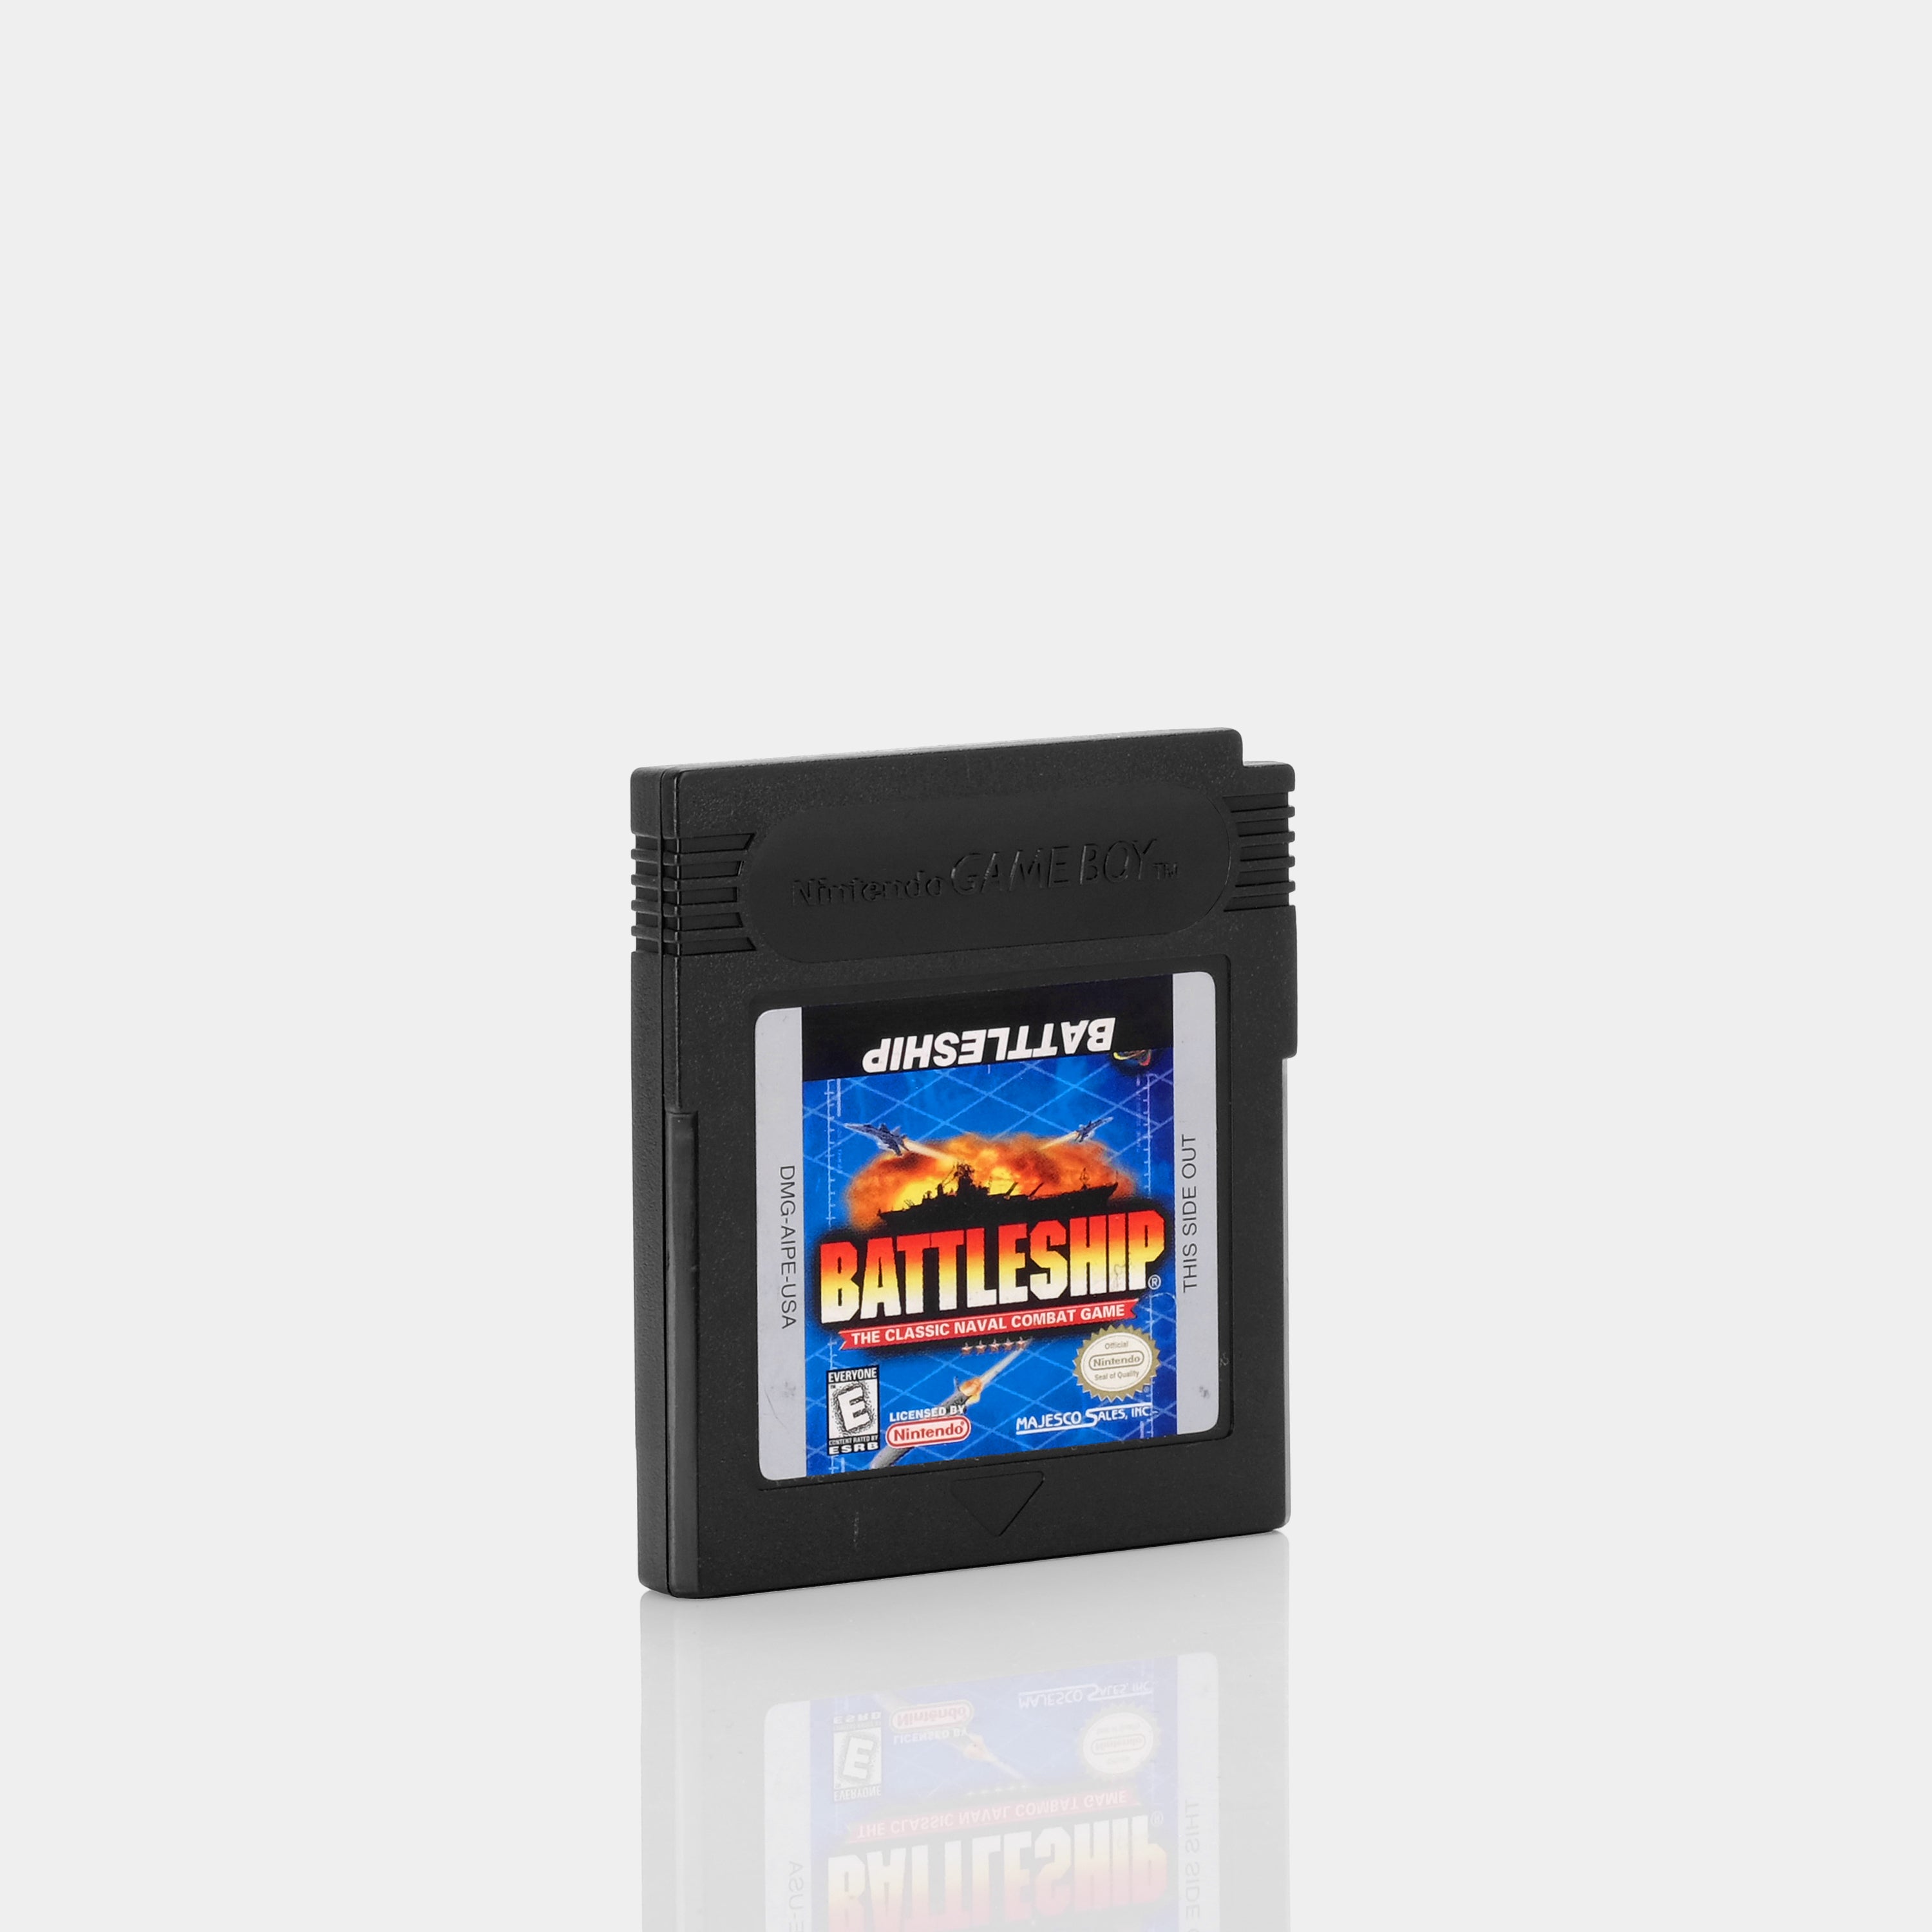 Battleship Game Boy Color Game